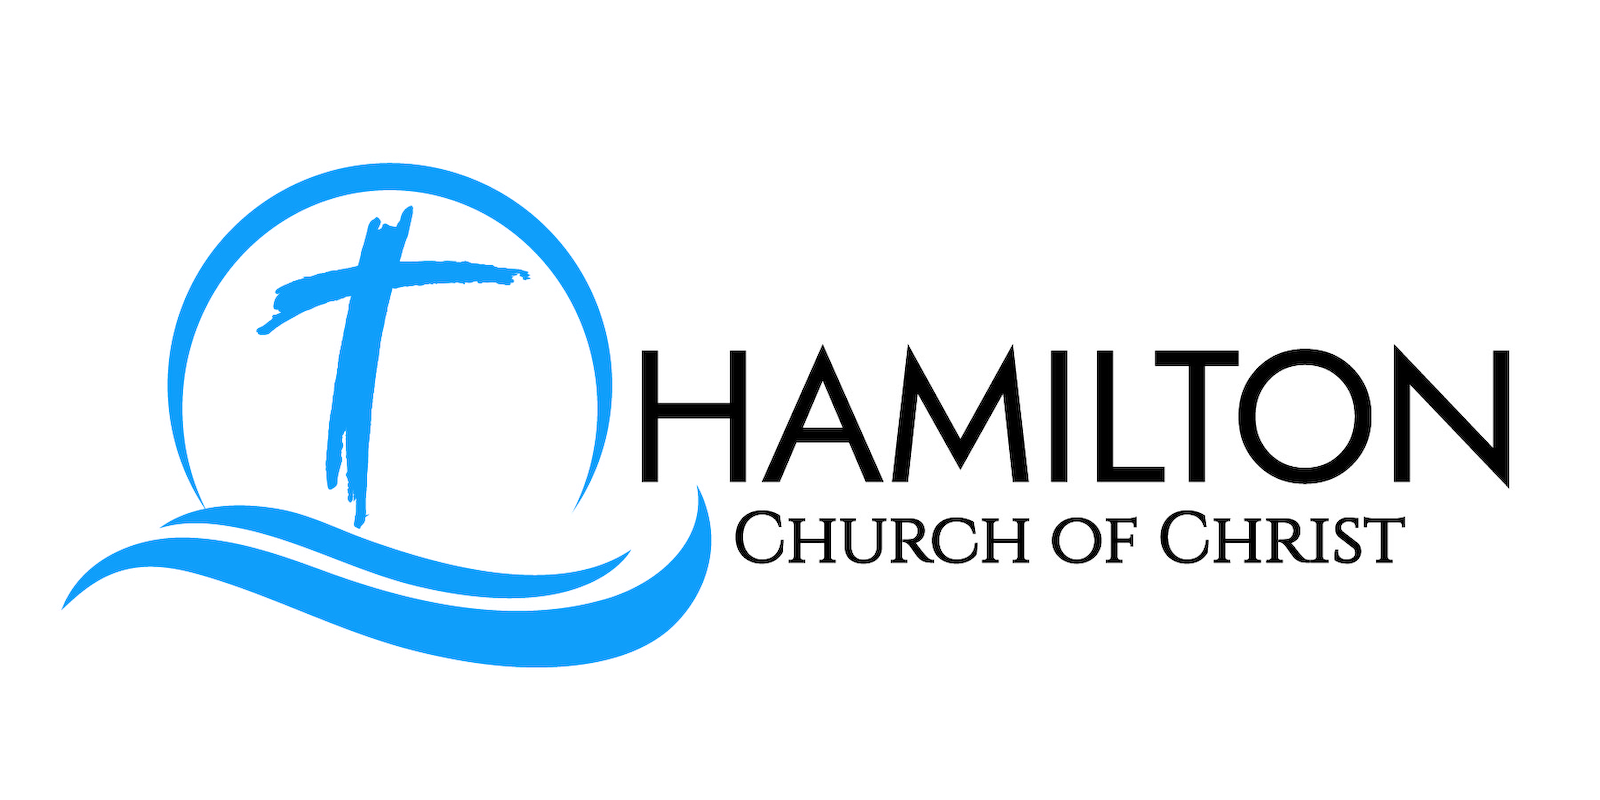 Hamilton Church of Christ